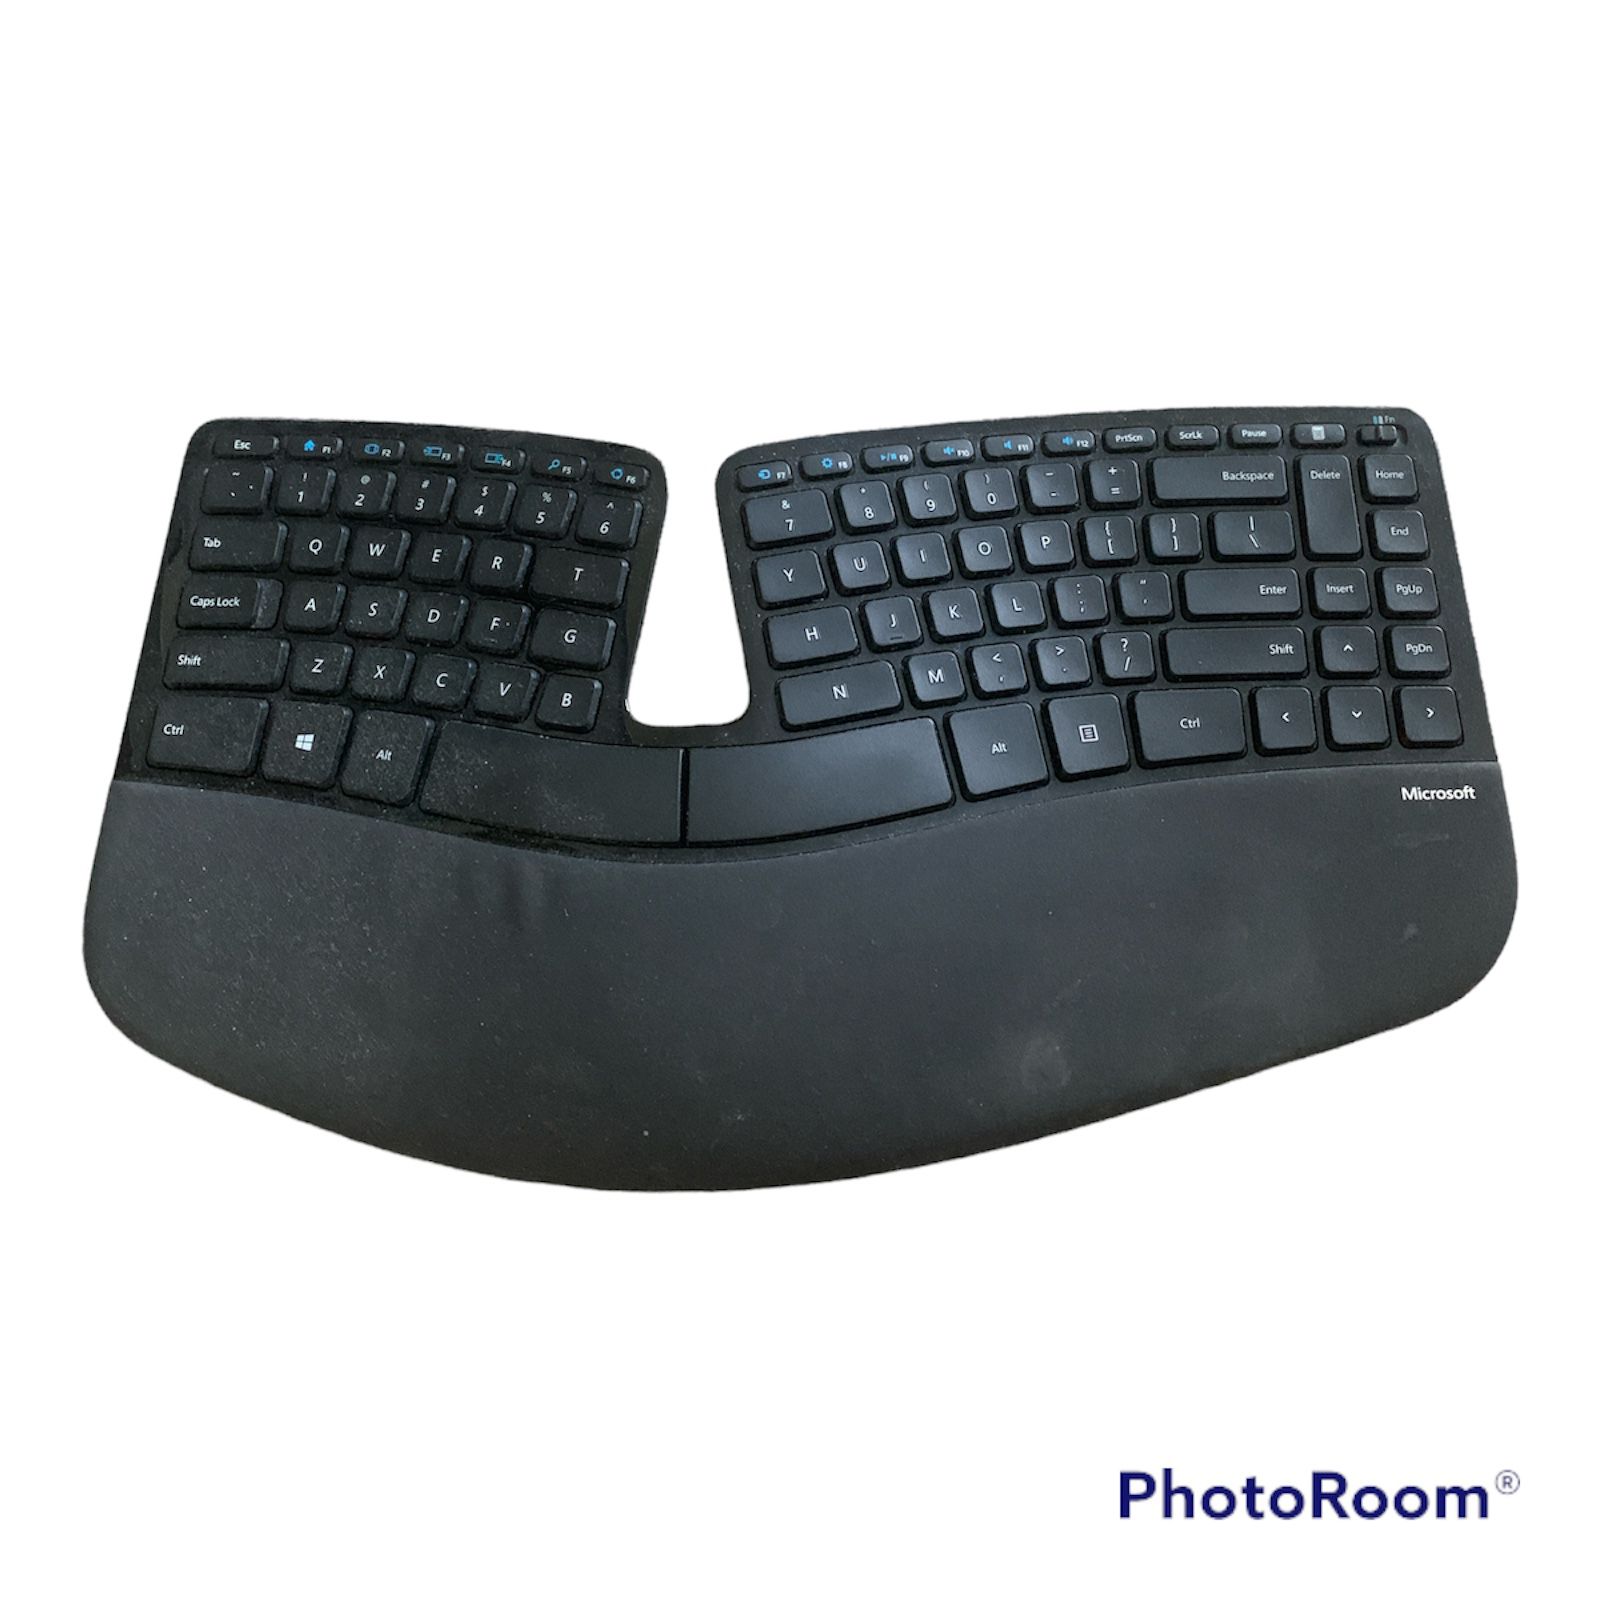  Microsoft Sculpt Keyboard Ergonomic Wireless Desktop USB Comfort Business